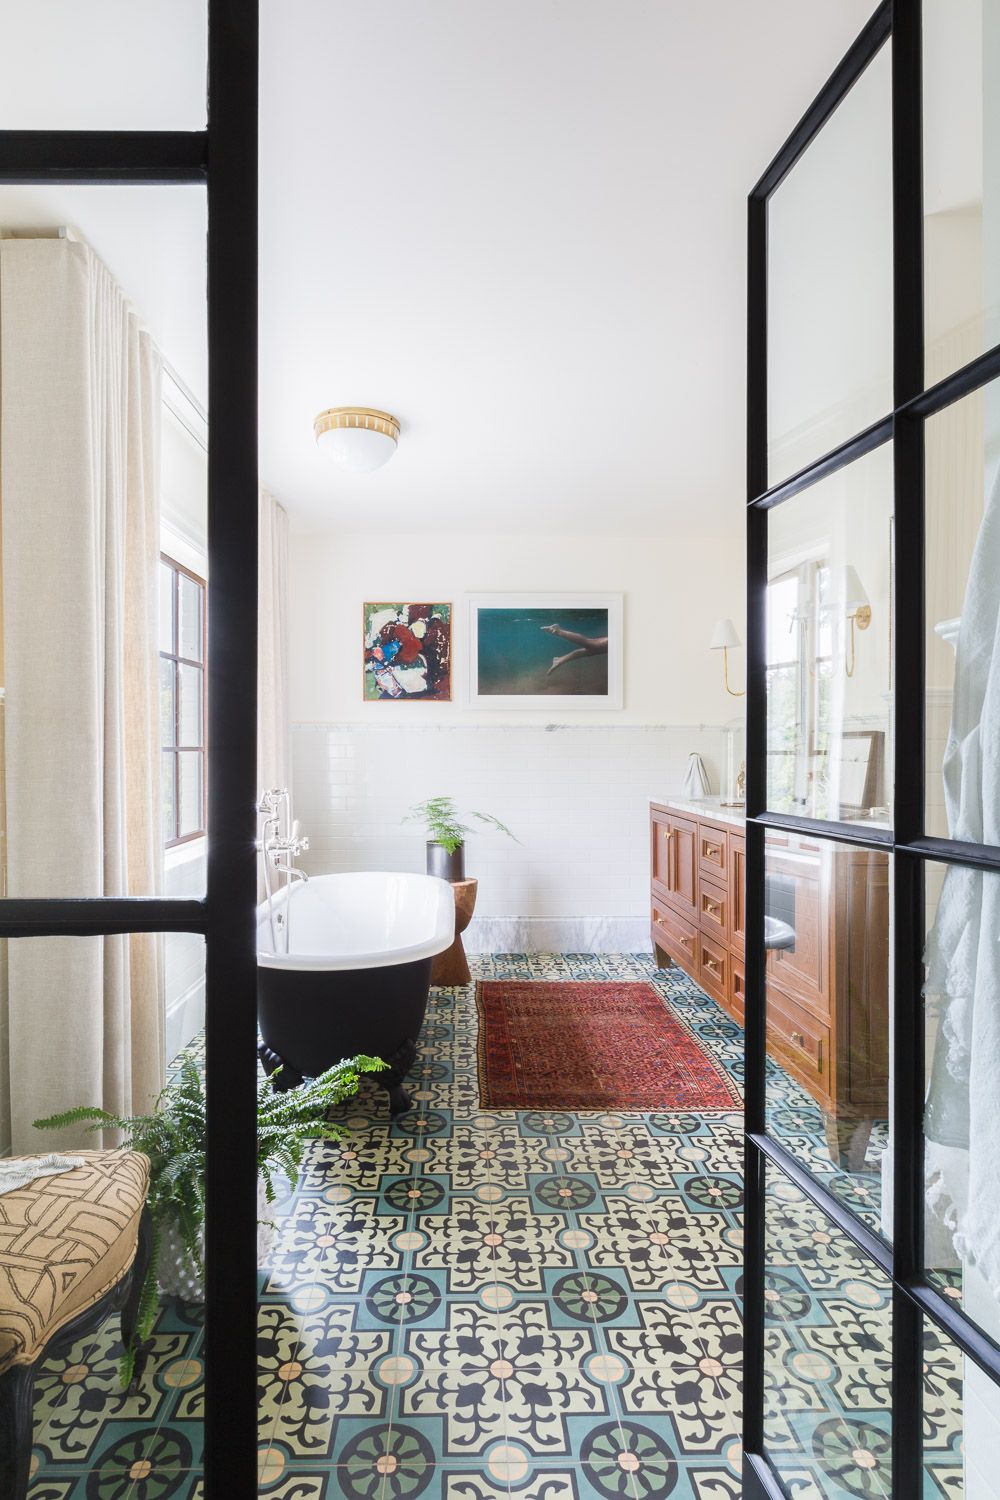 Creative Bathroom Tile Design Ideas, Bathroom Floor Tile Designs